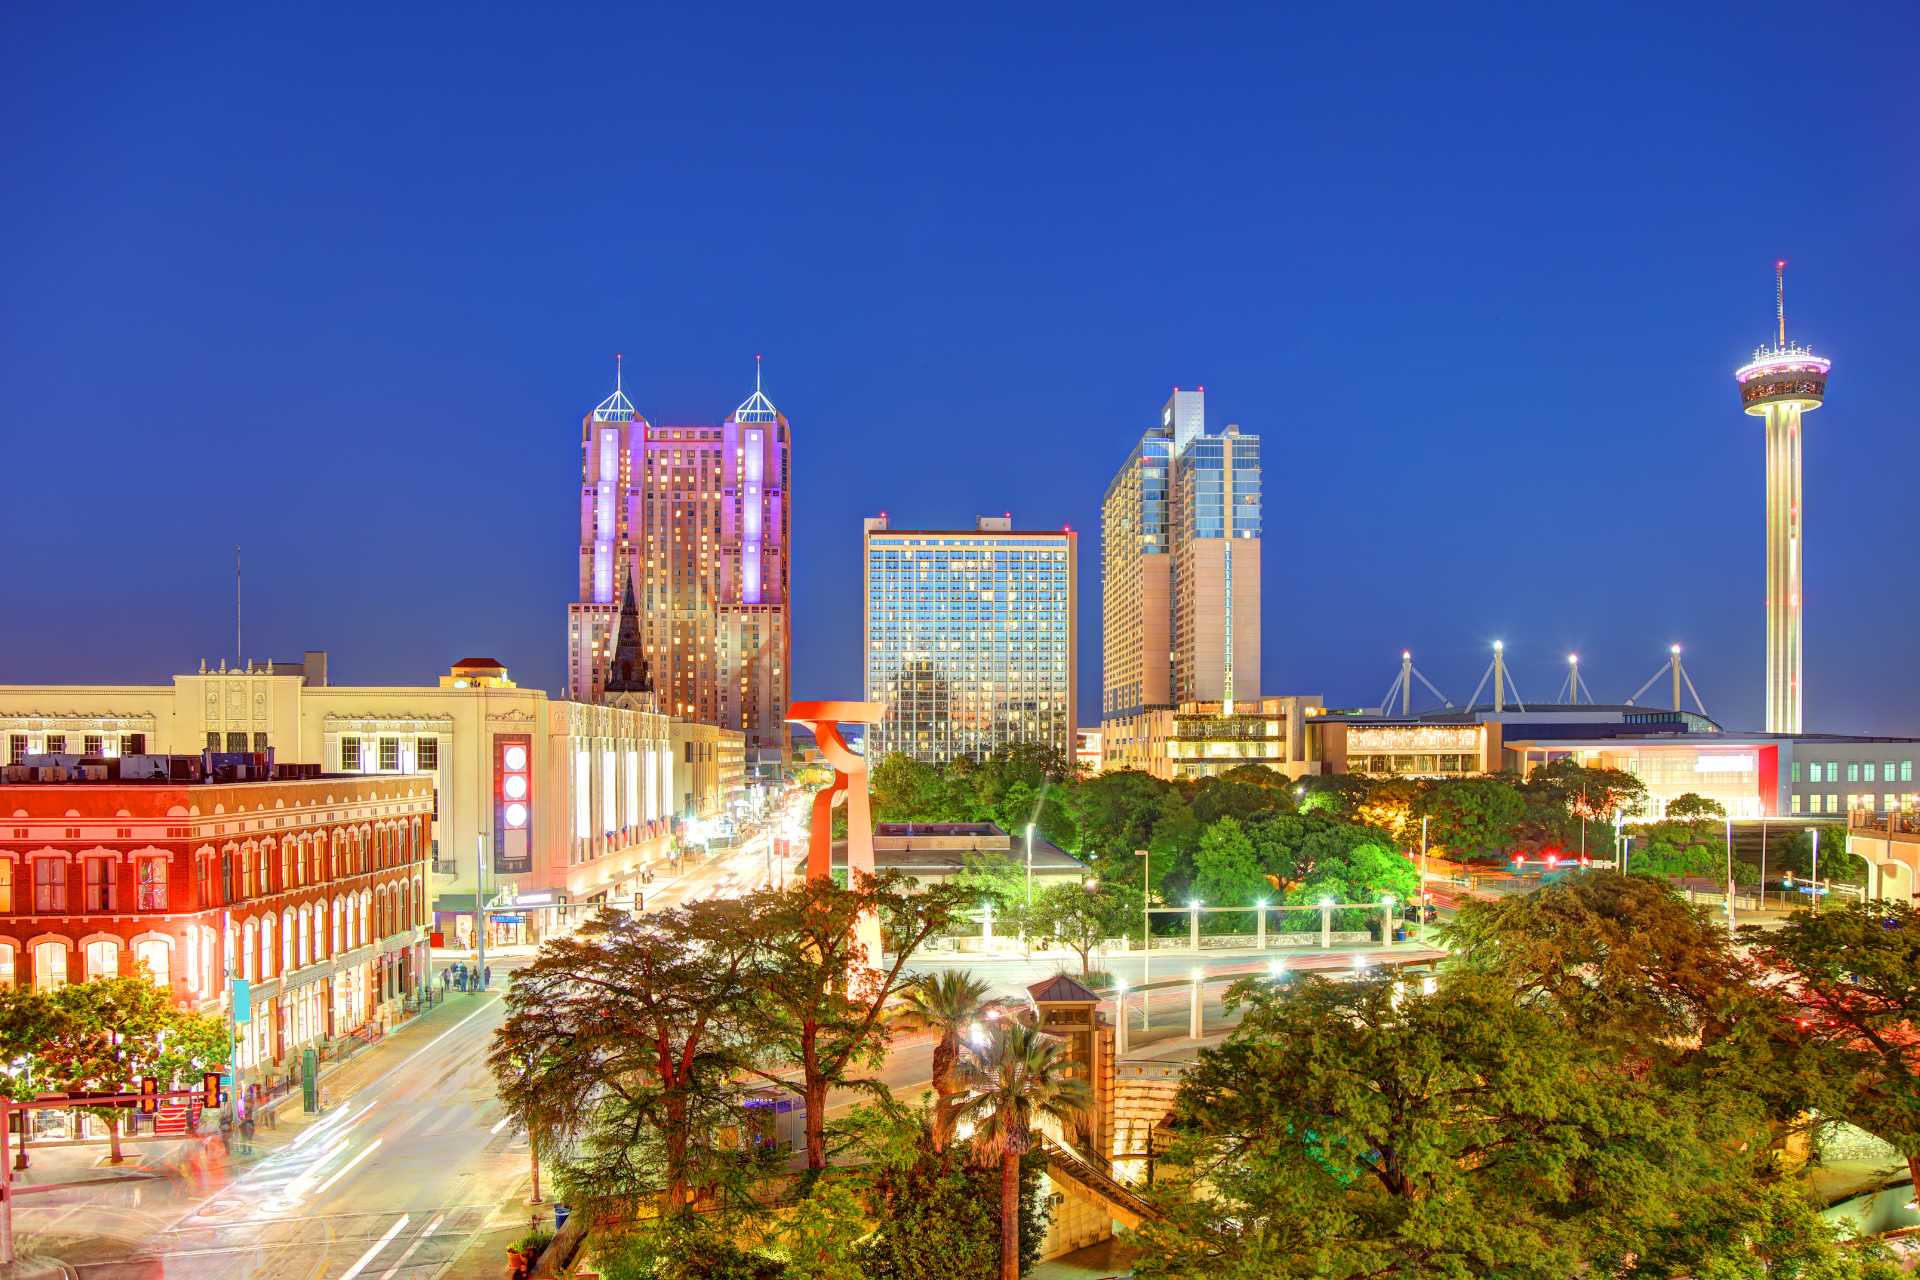 Downtown San Antonio Texas Skyline ©Getty Images